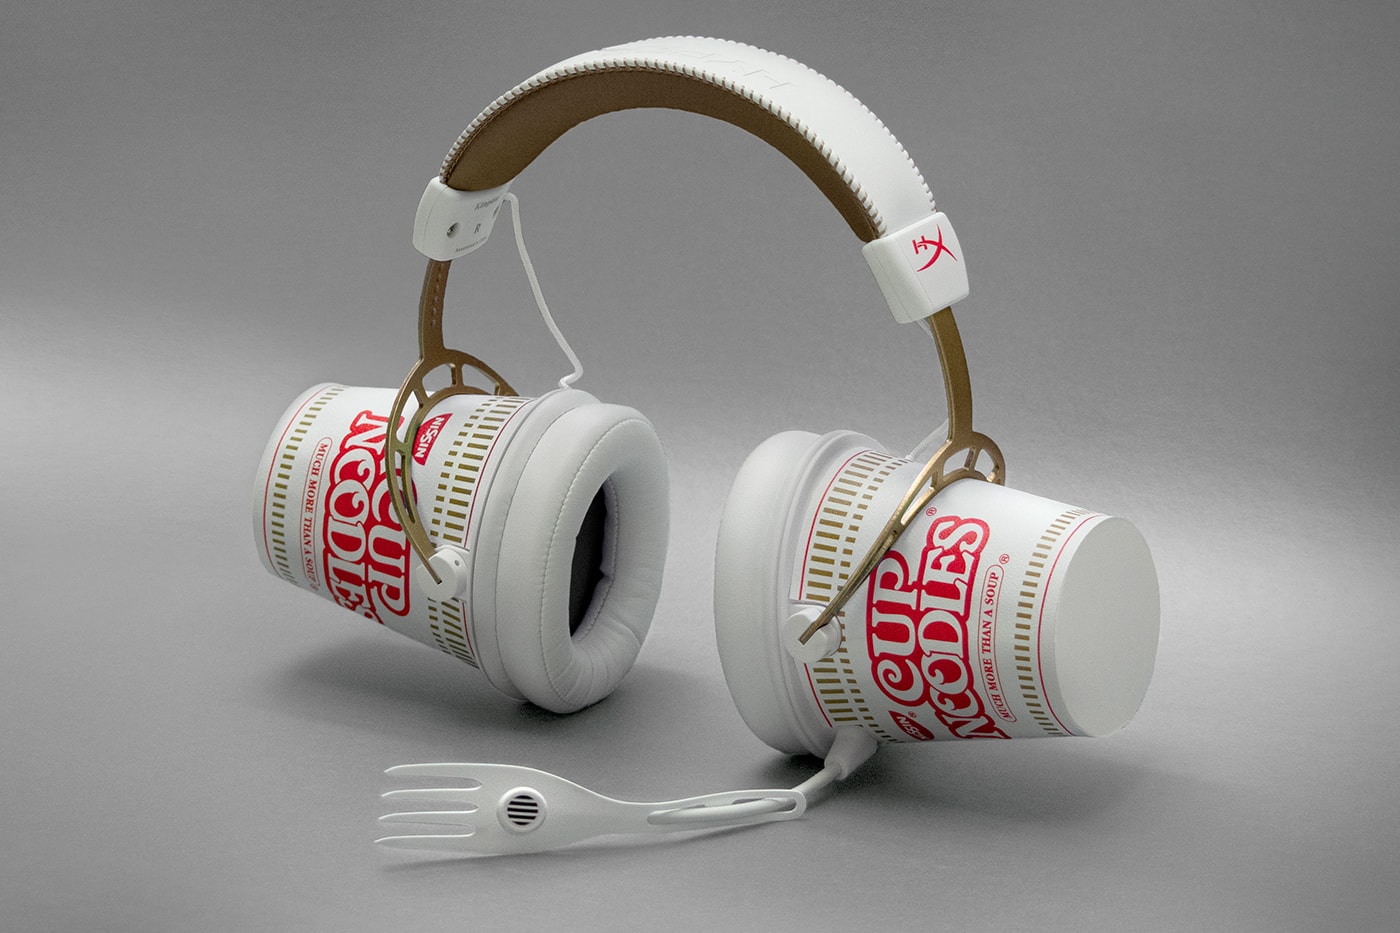 Nissin x HyperX Cup Noodle Headphones Info cup noodles fashion electronics headphone music 